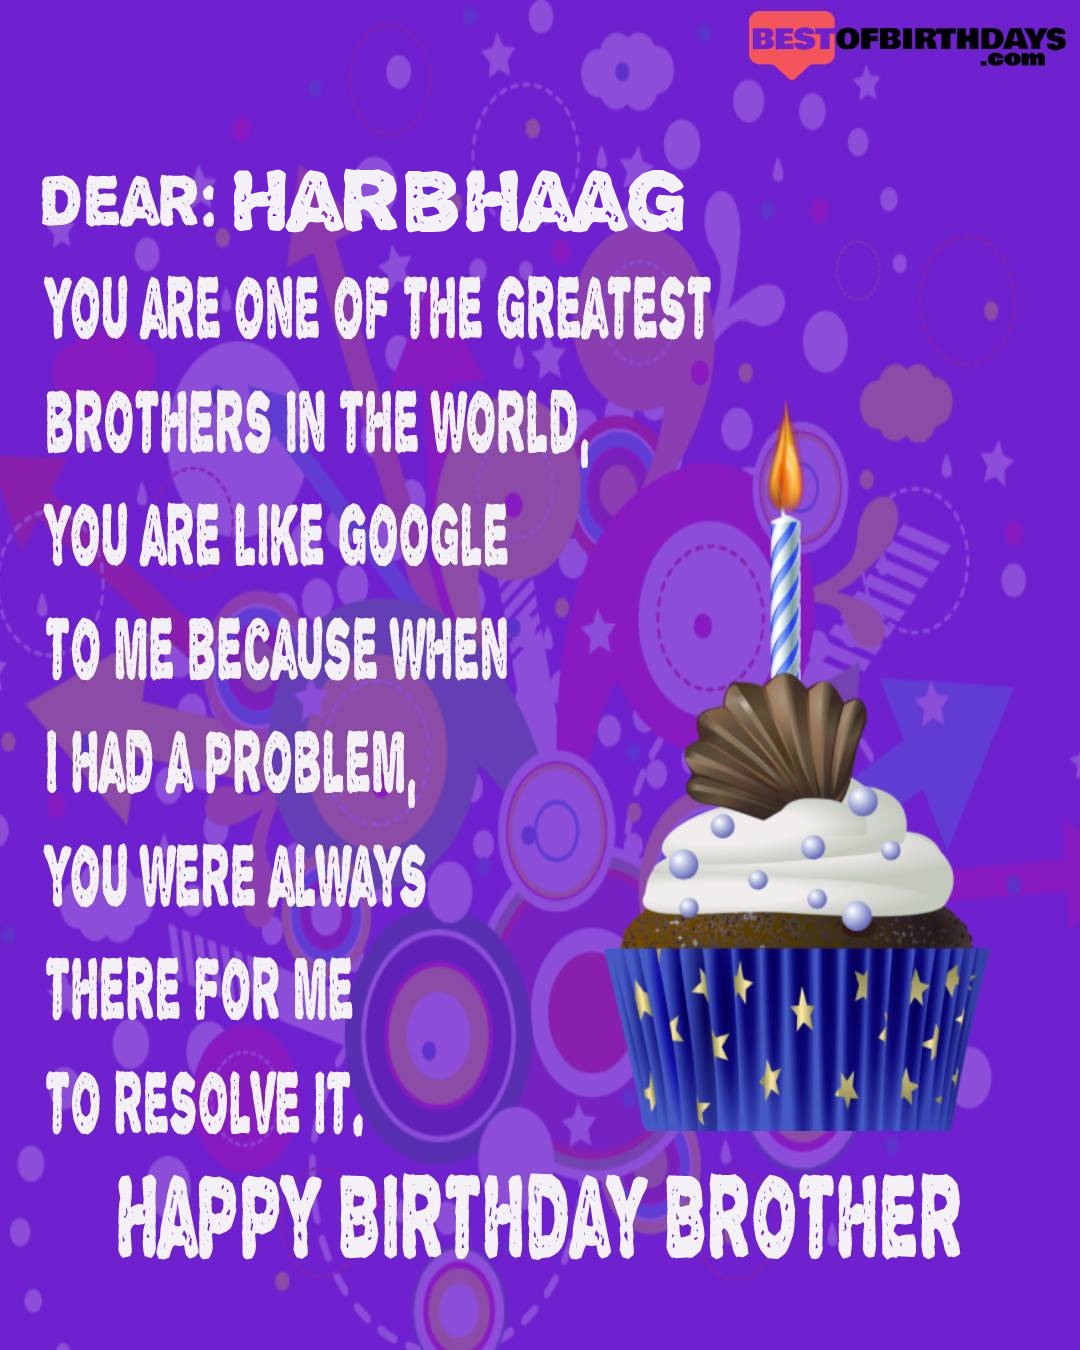 Happy birthday harbhaag bhai brother bro